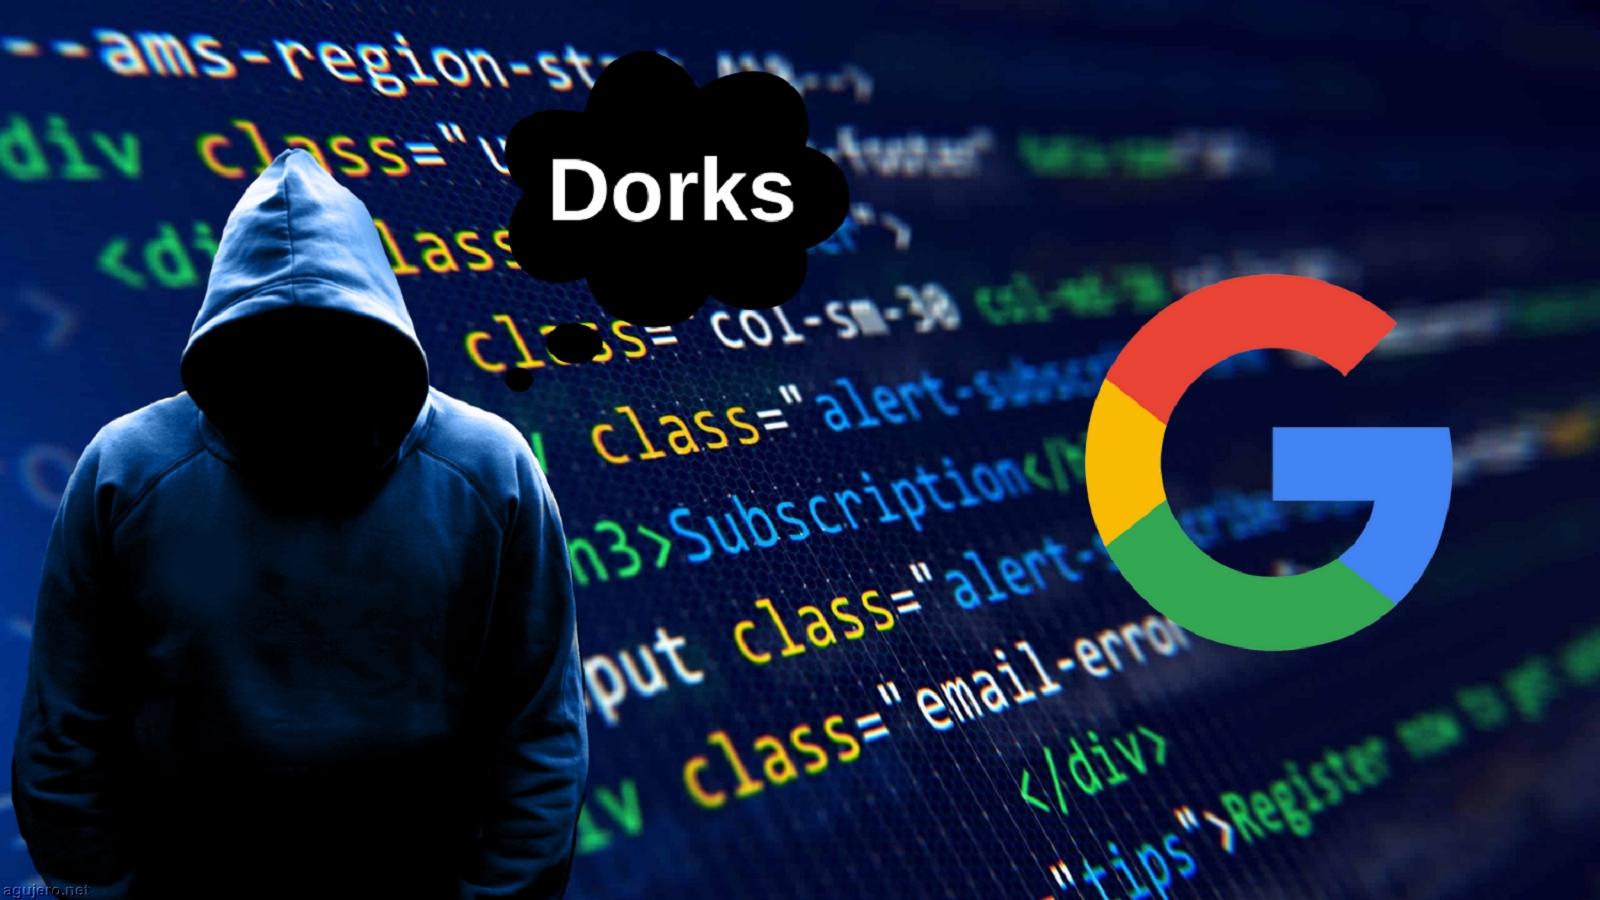 Google Dorks